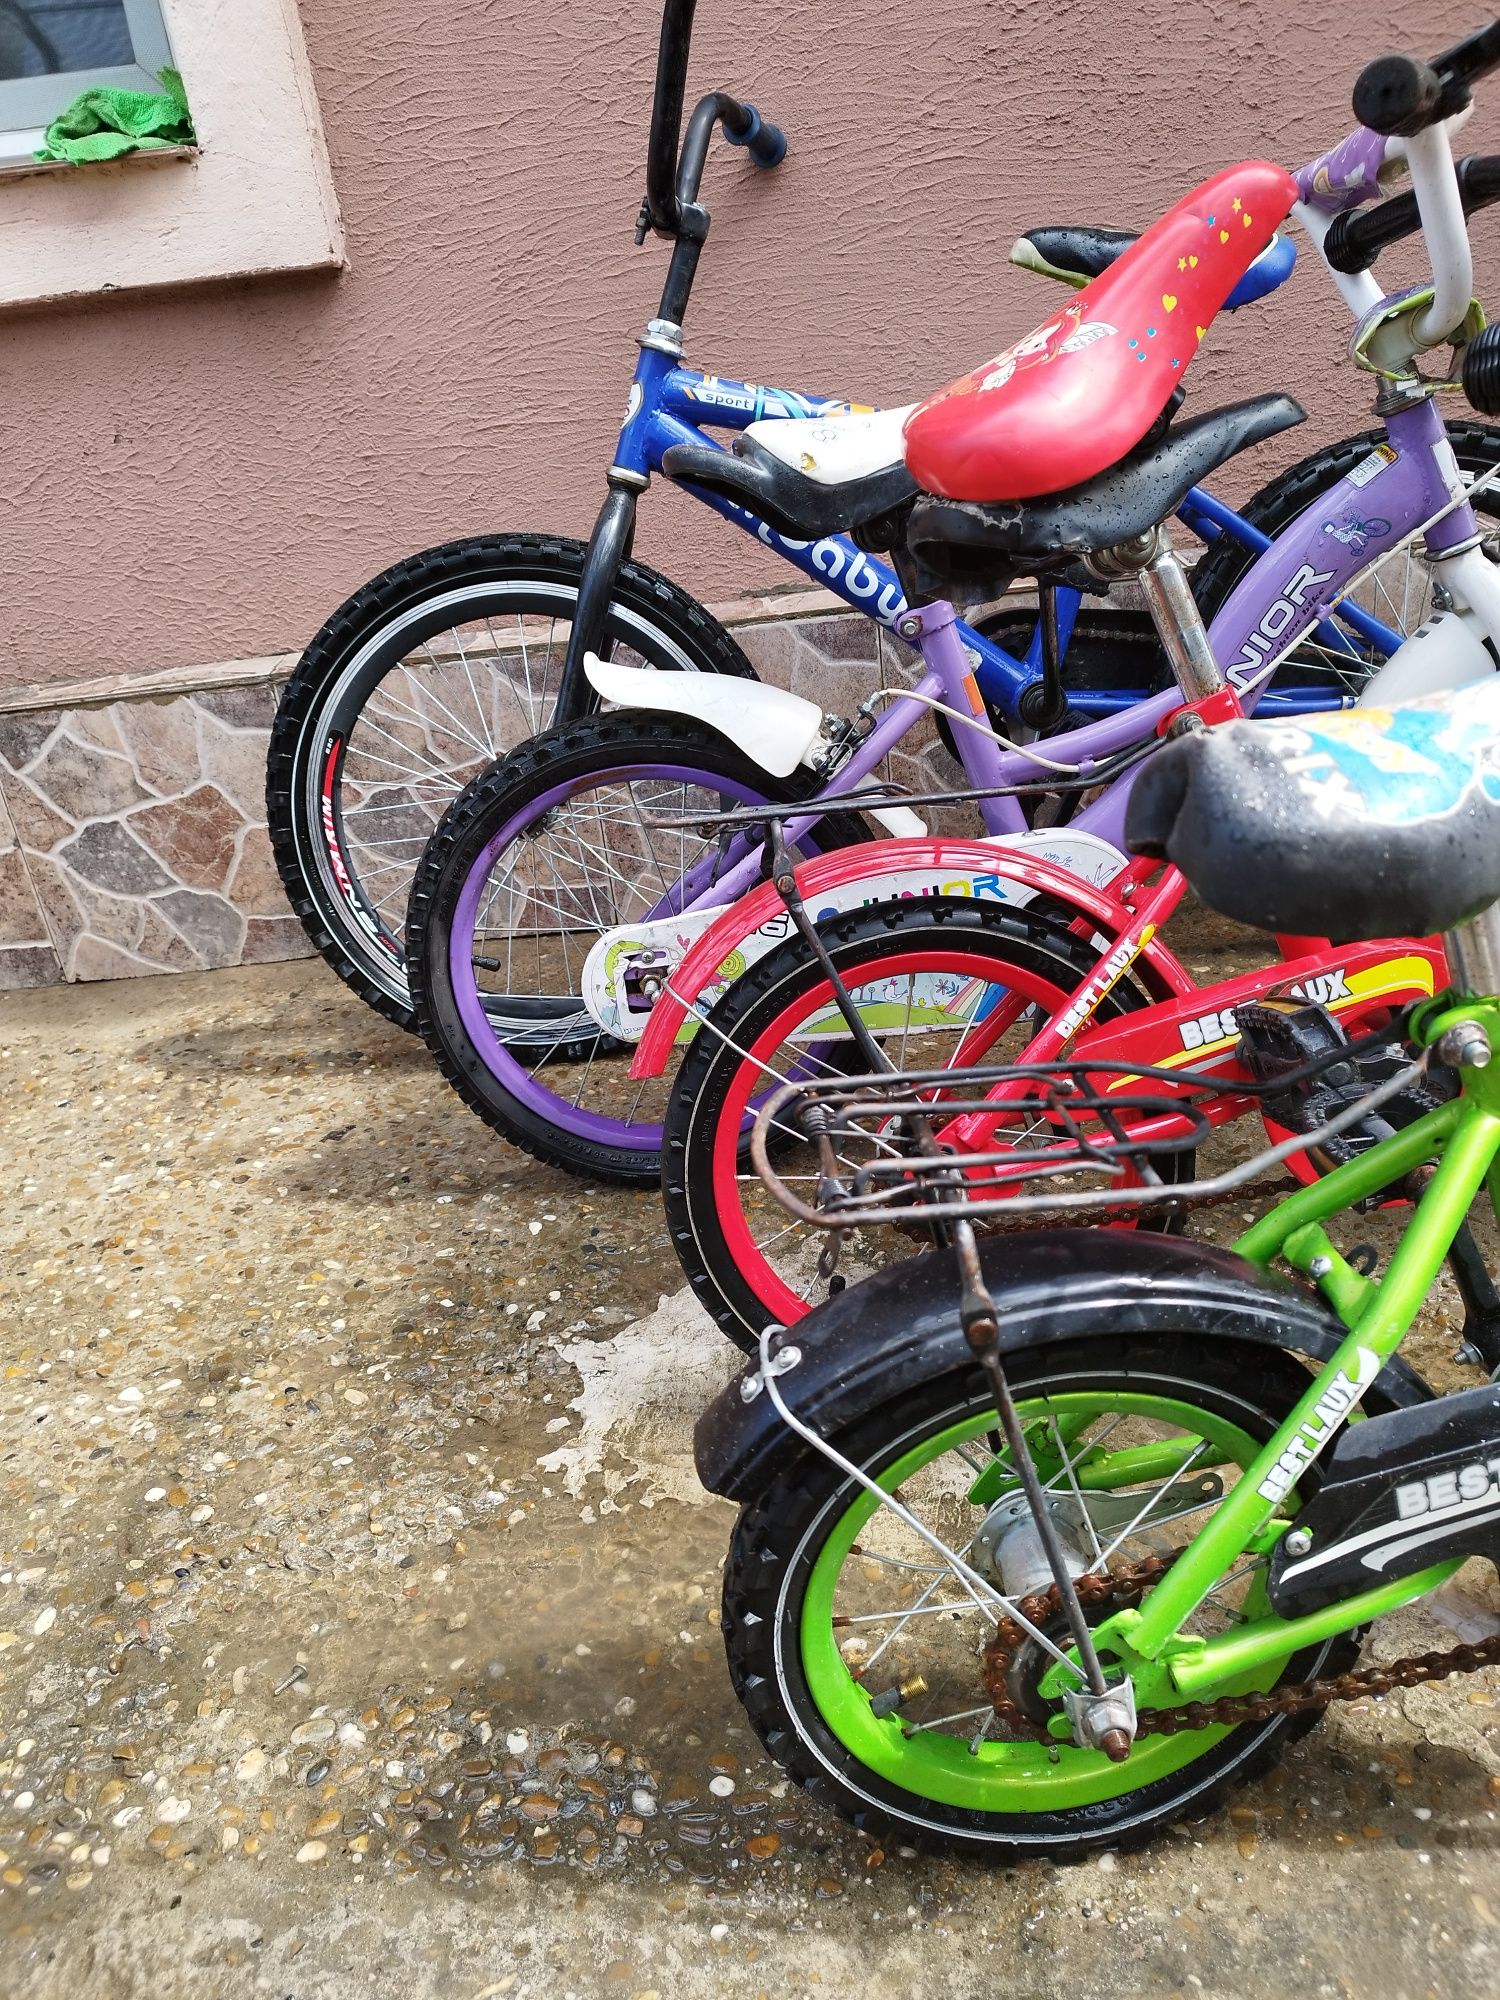 Biciclete copii diferite marimi